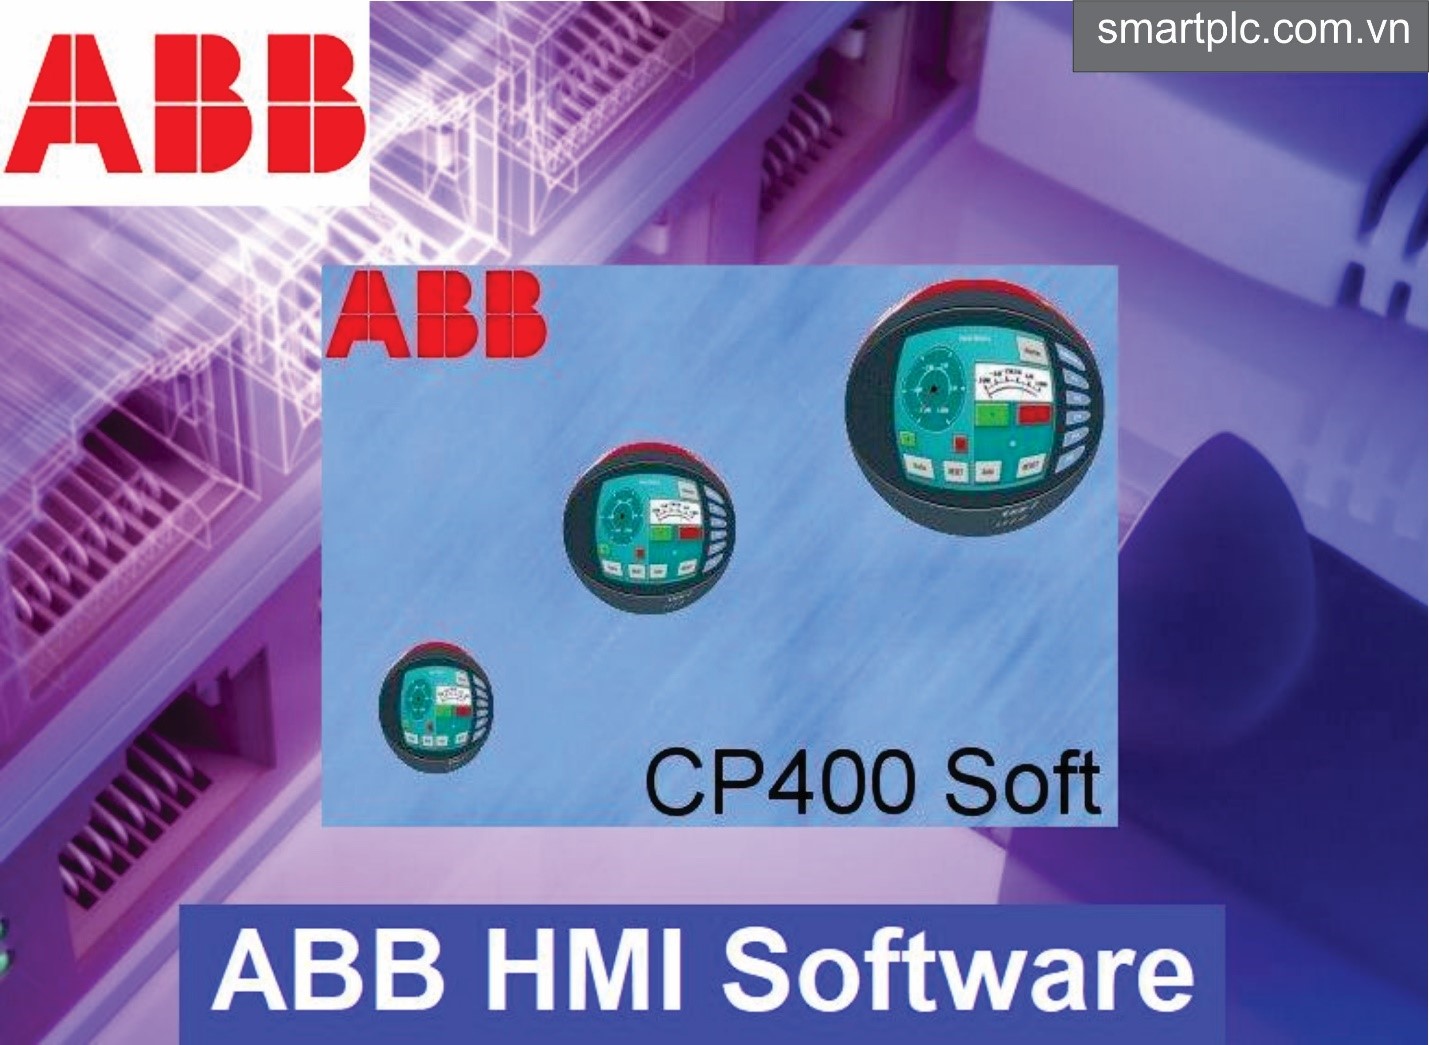 abb hmi software download